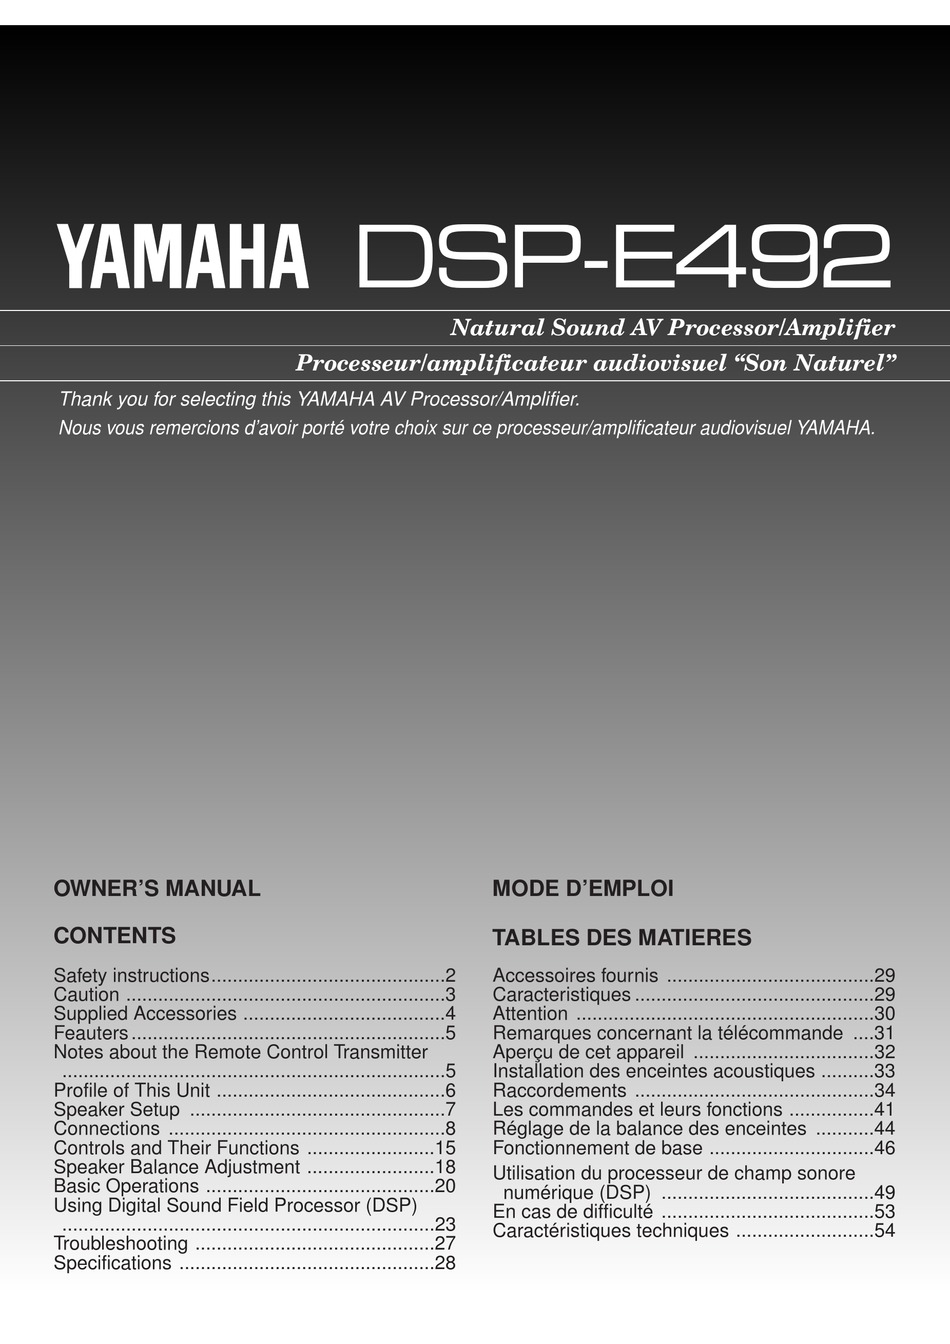 YAMAHA DSP-E492 OWNER'S MANUAL Pdf Download | ManualsLib